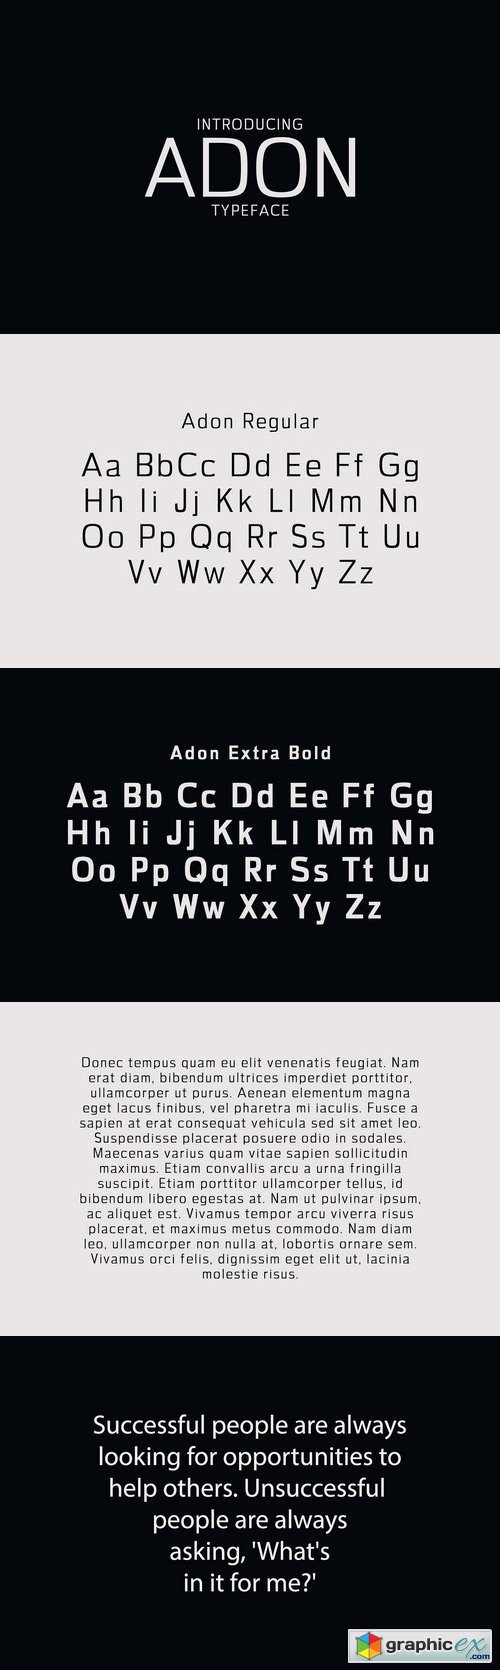 Adon Sans Serif 4 Fonts Family Pack